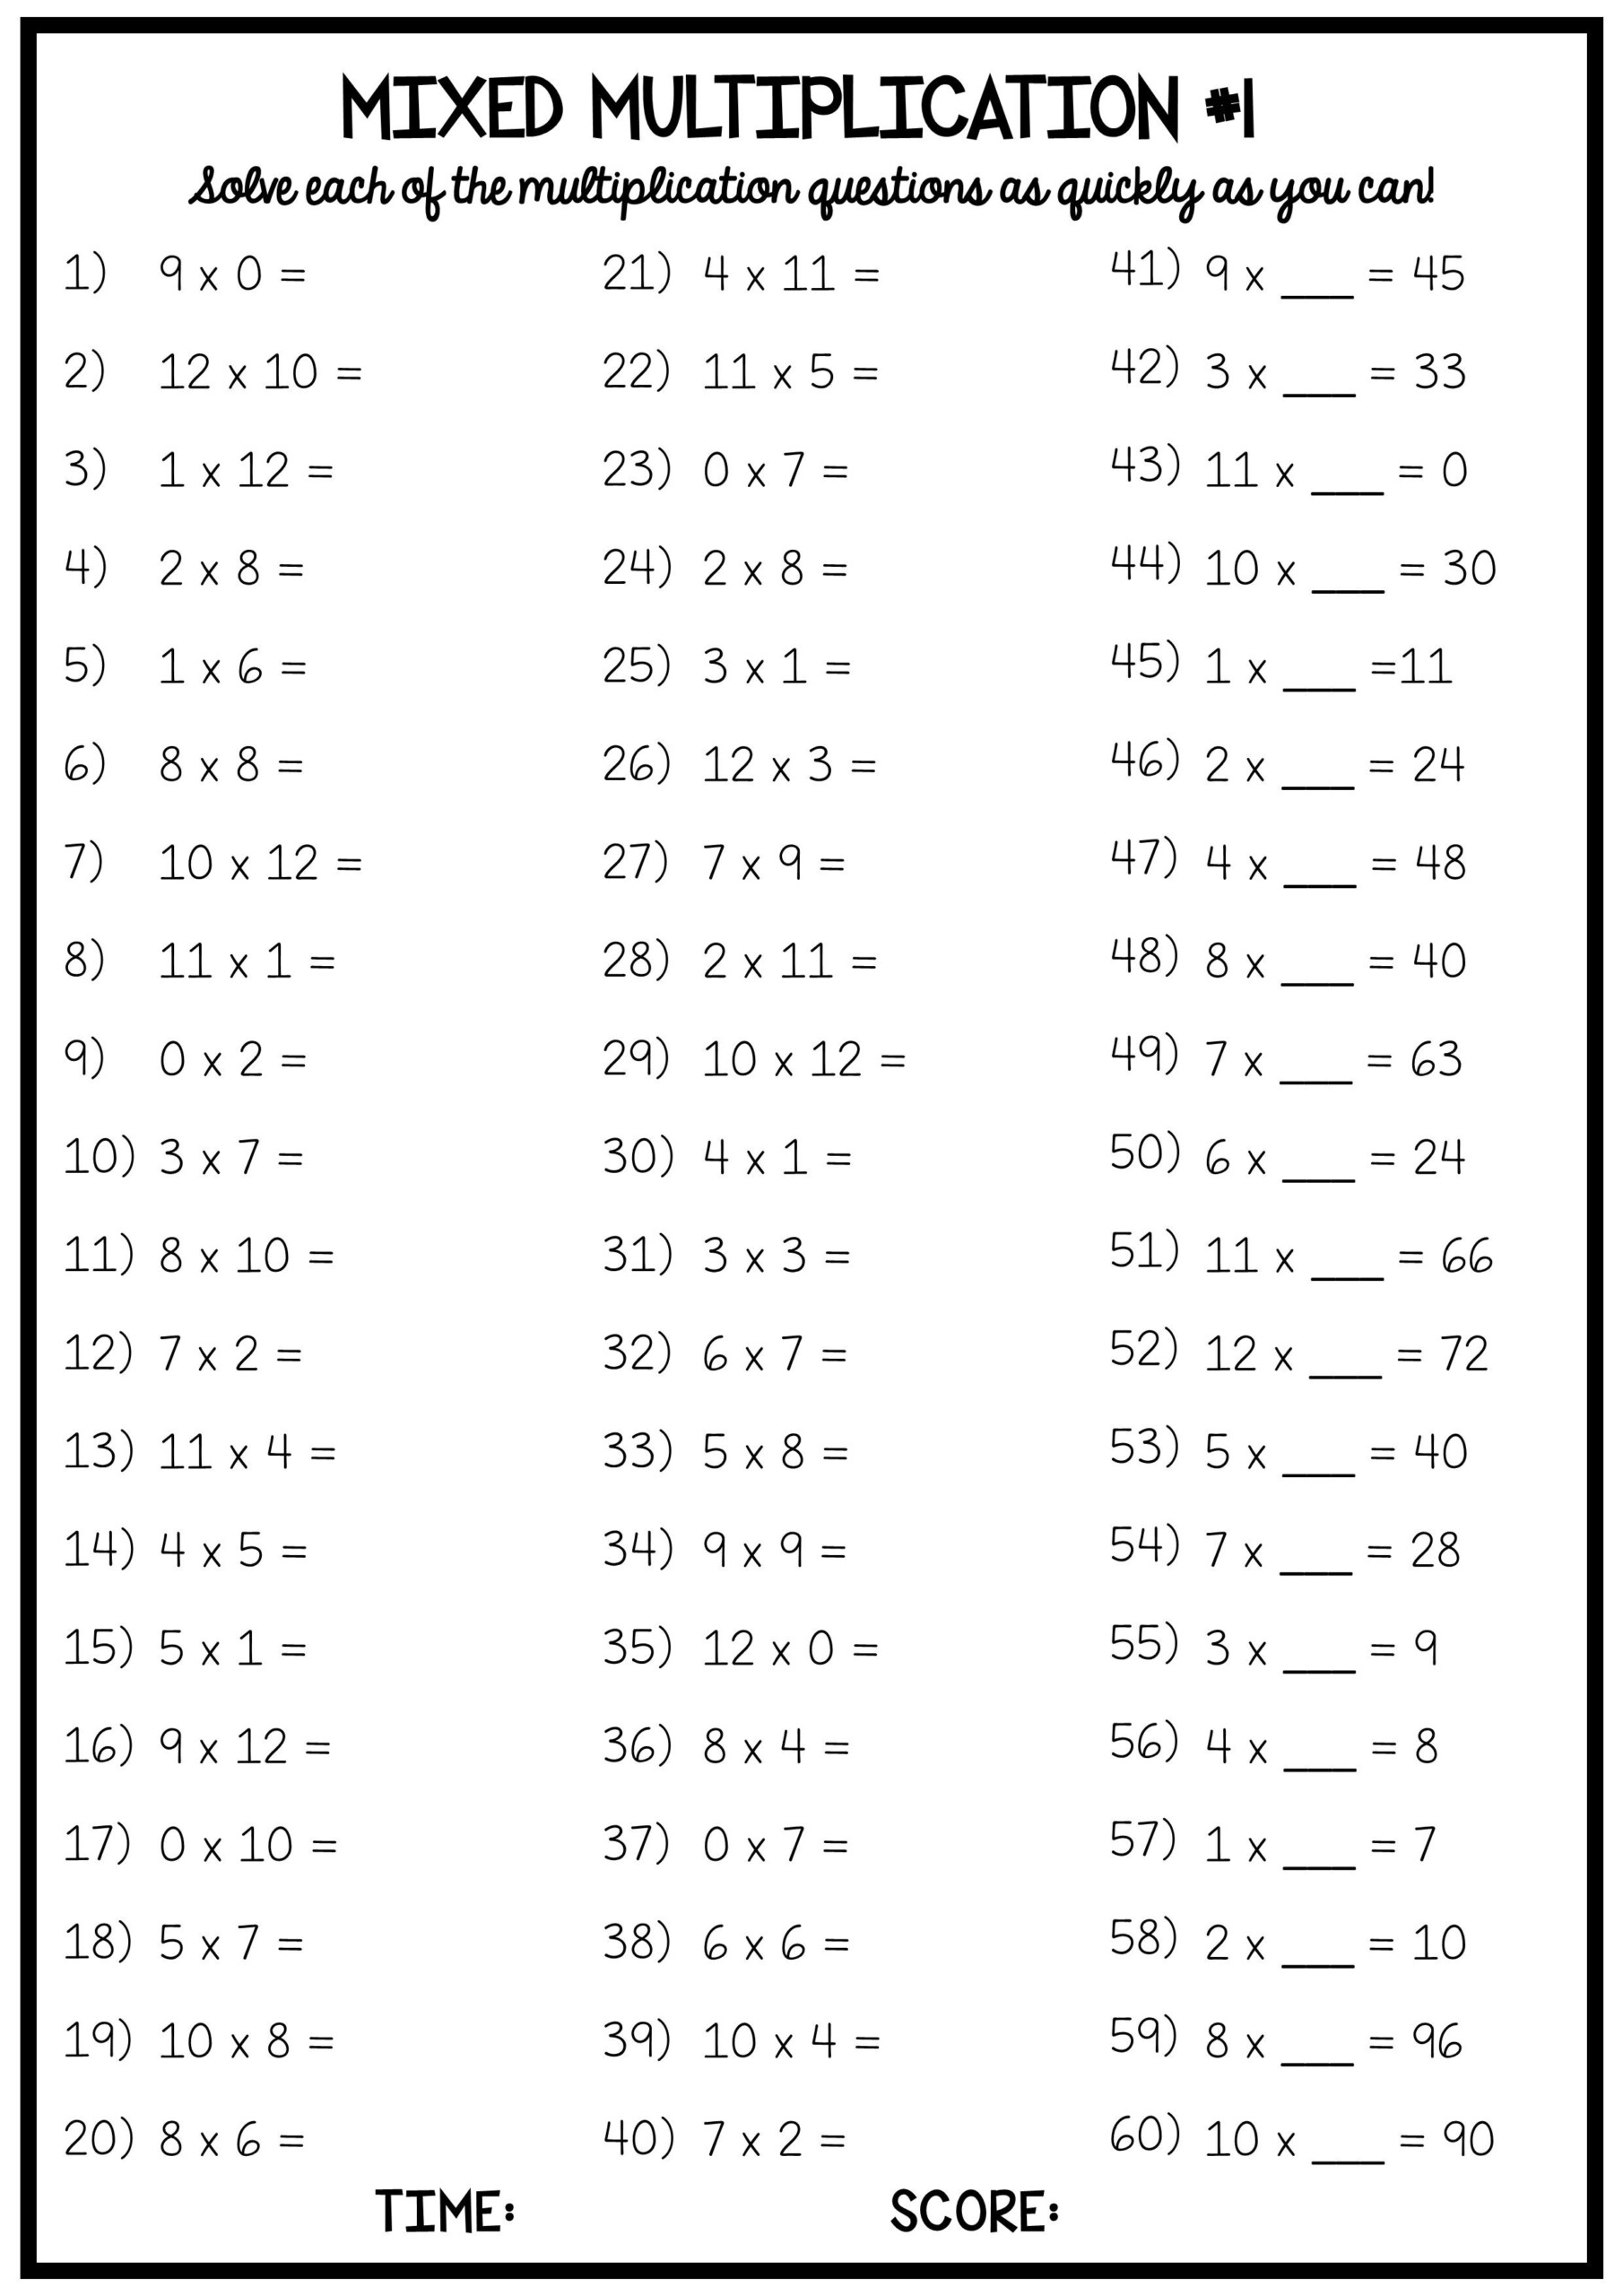 multiplication-chart-missing-numbers-printablemultiplication